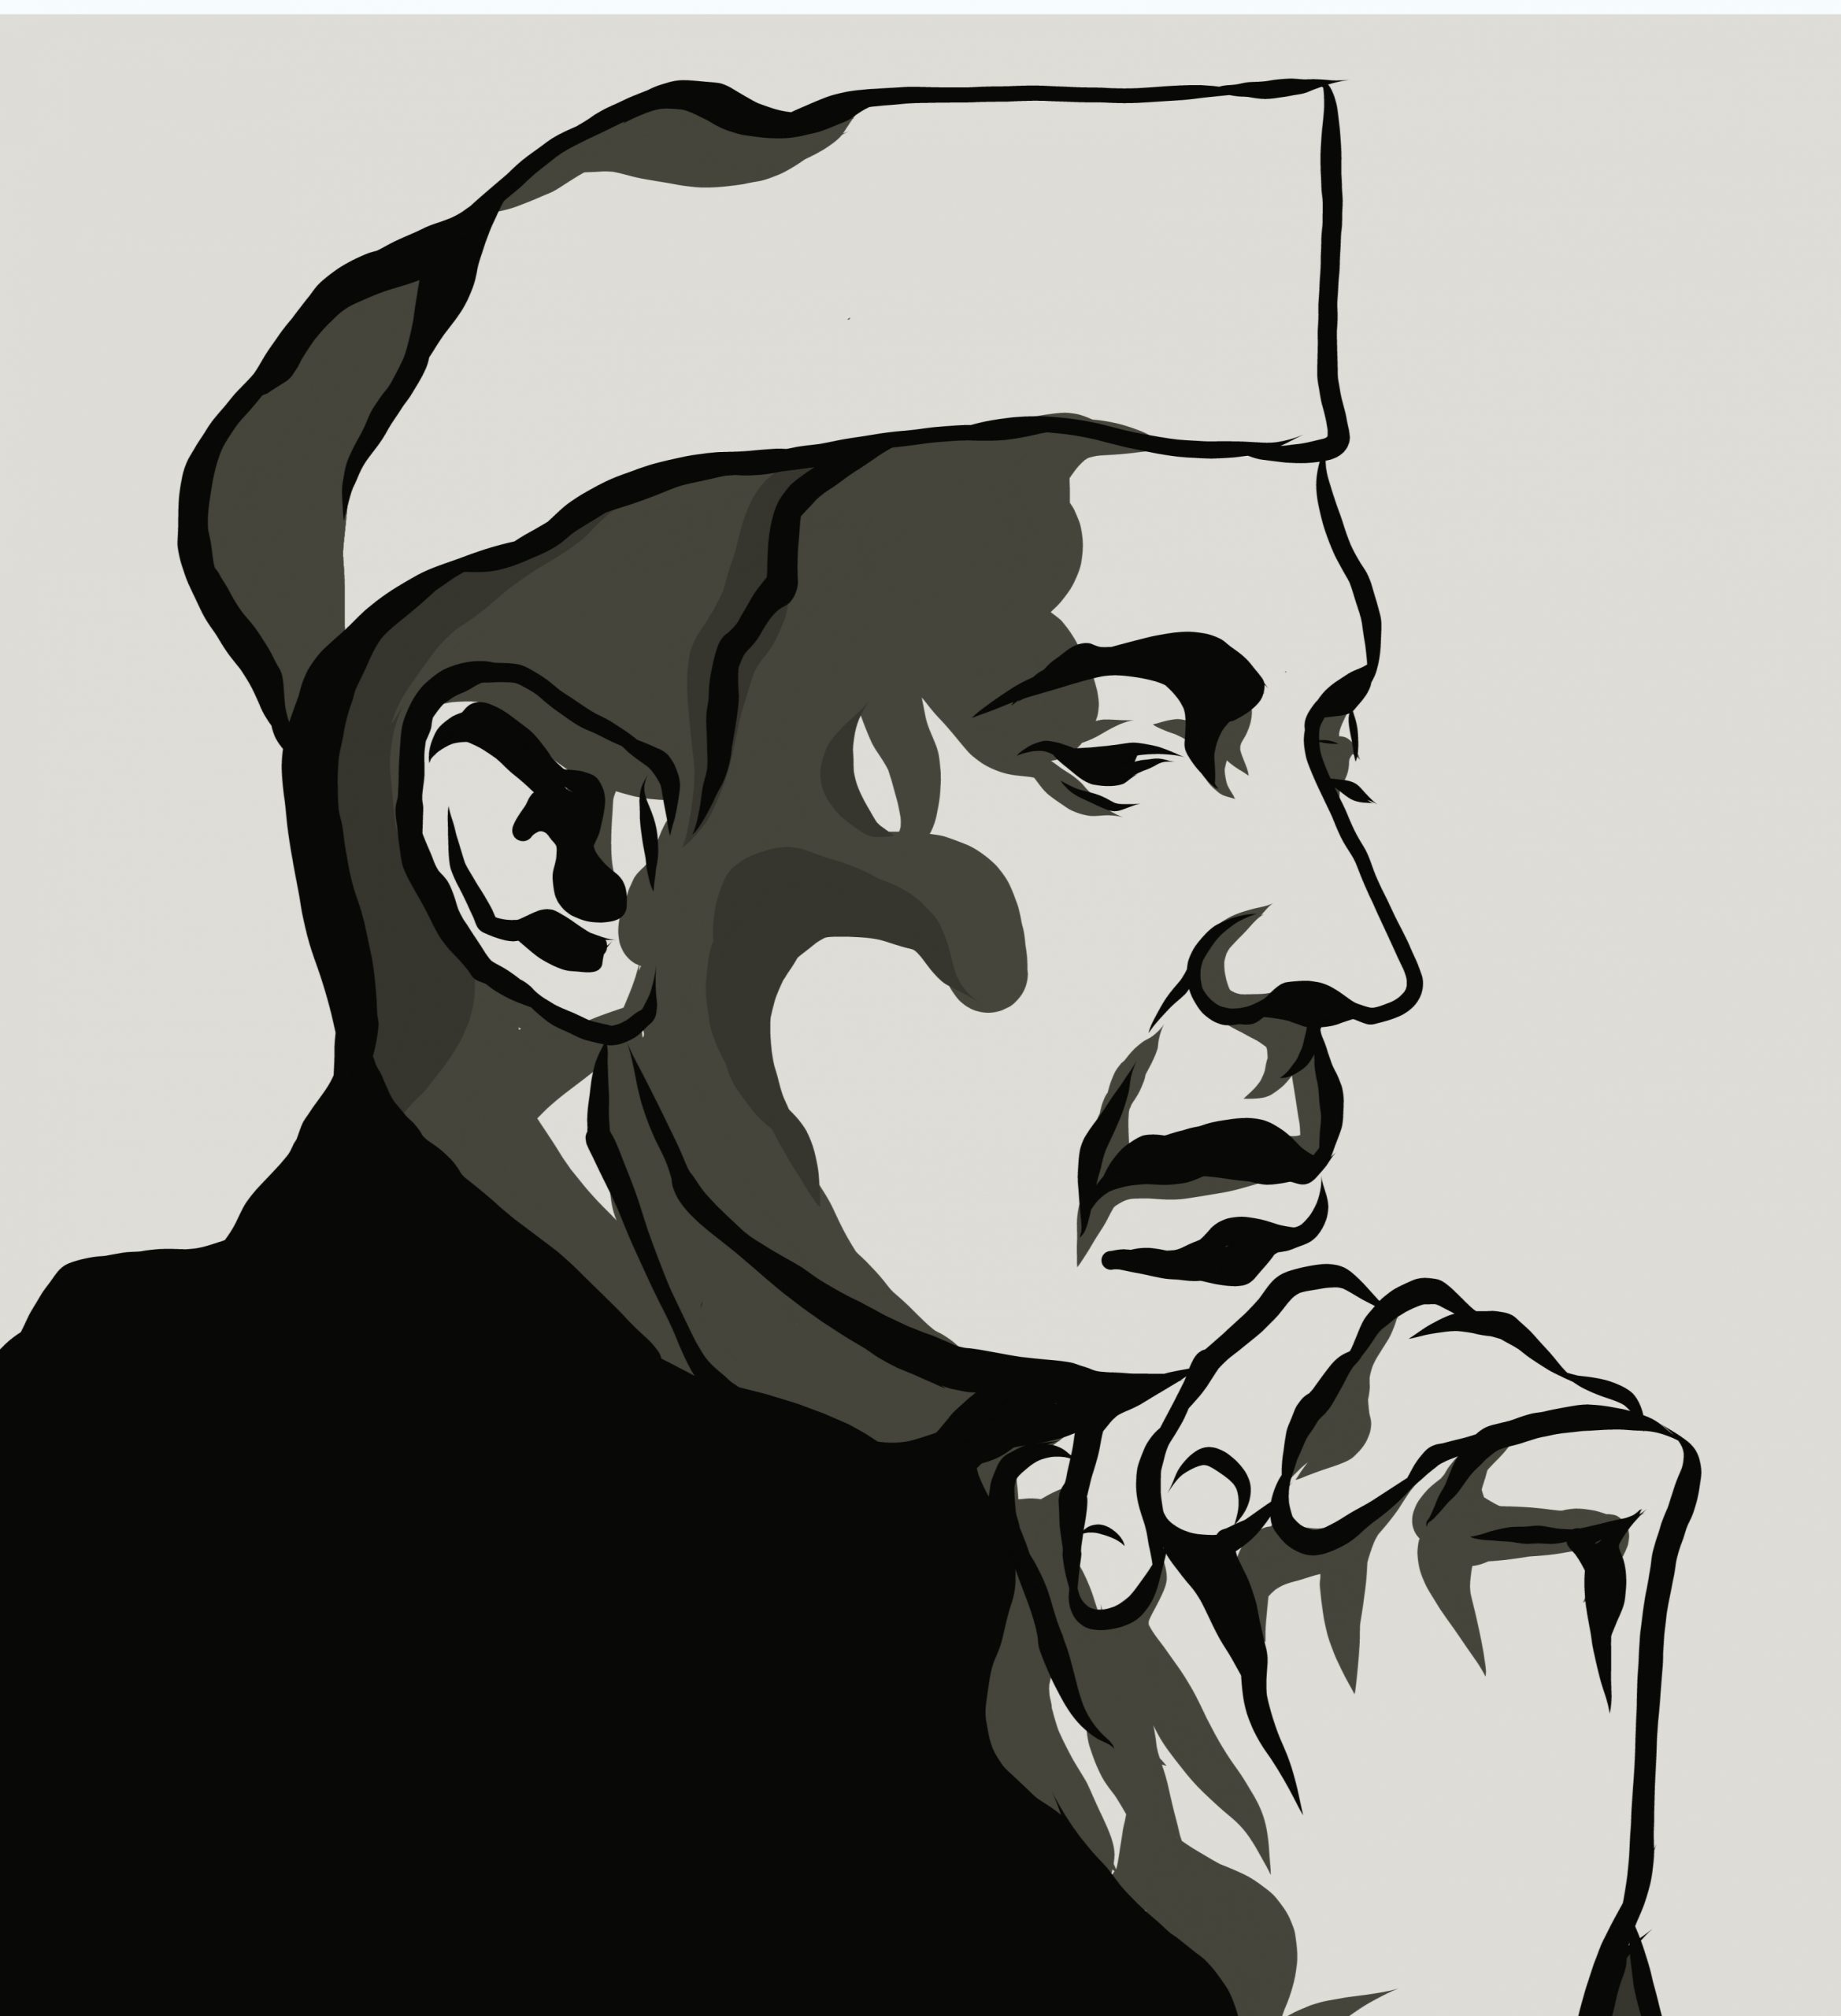 Nehru Outline Drawing - Step by Step Tutorial